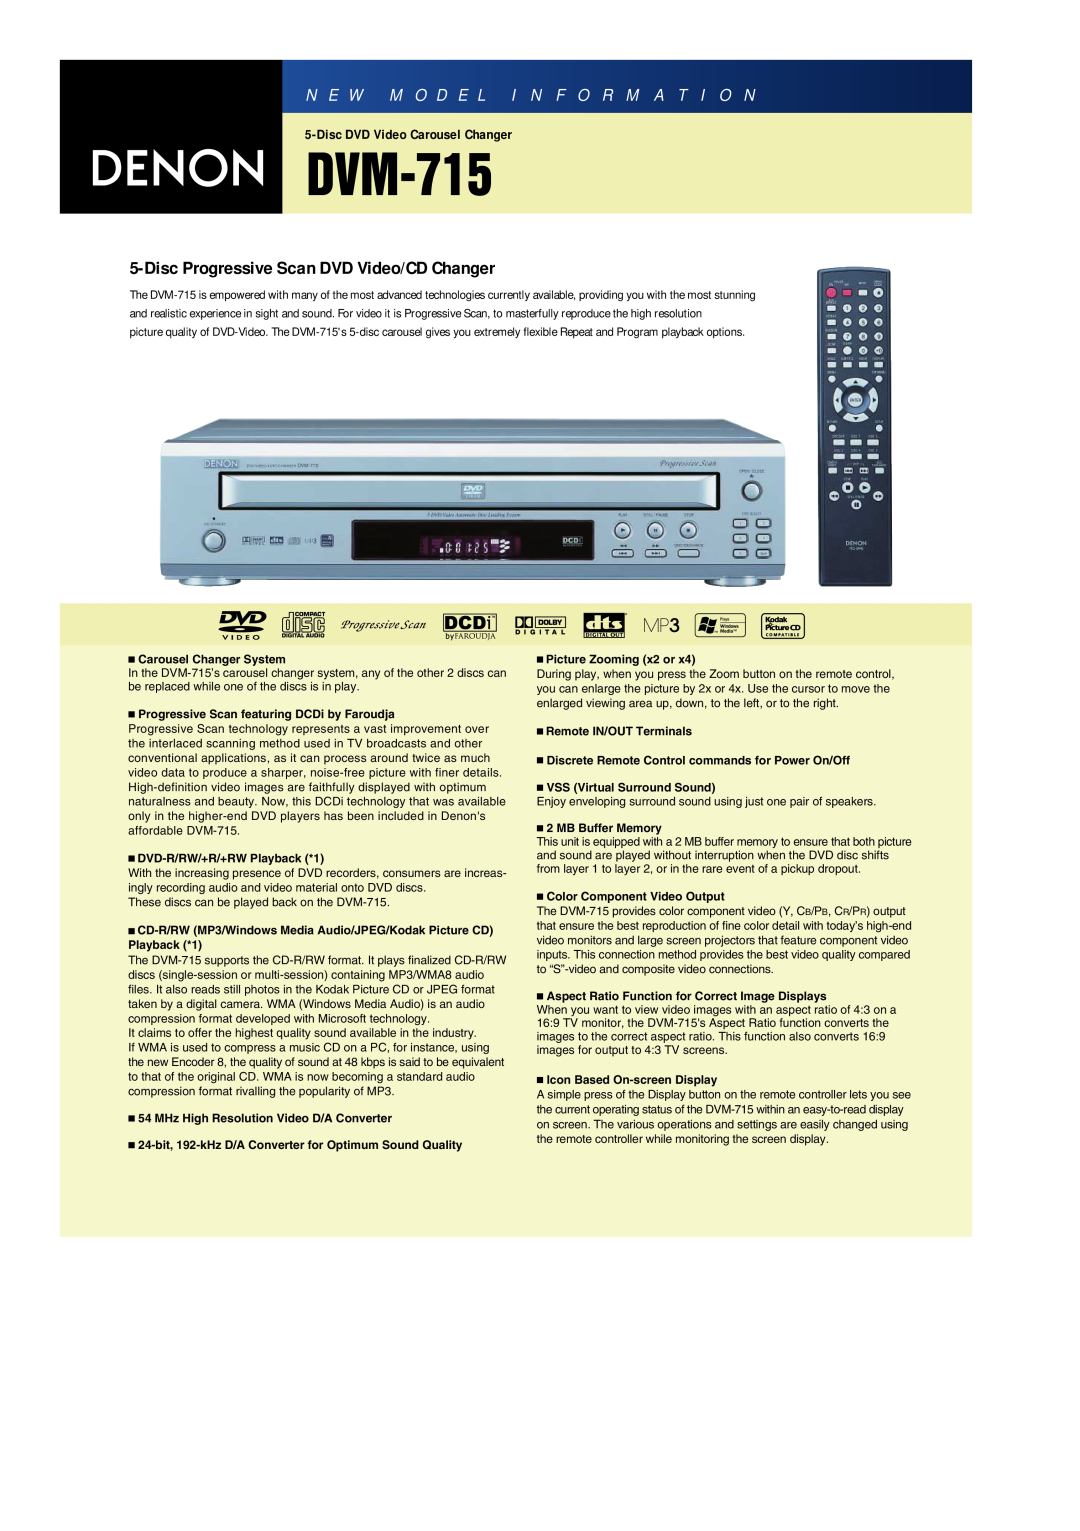 Denon DVM-715S manual N E W M O D E L I N F O R M A T I O N, Disc Progressive Scan DVD Video/CD Changer 